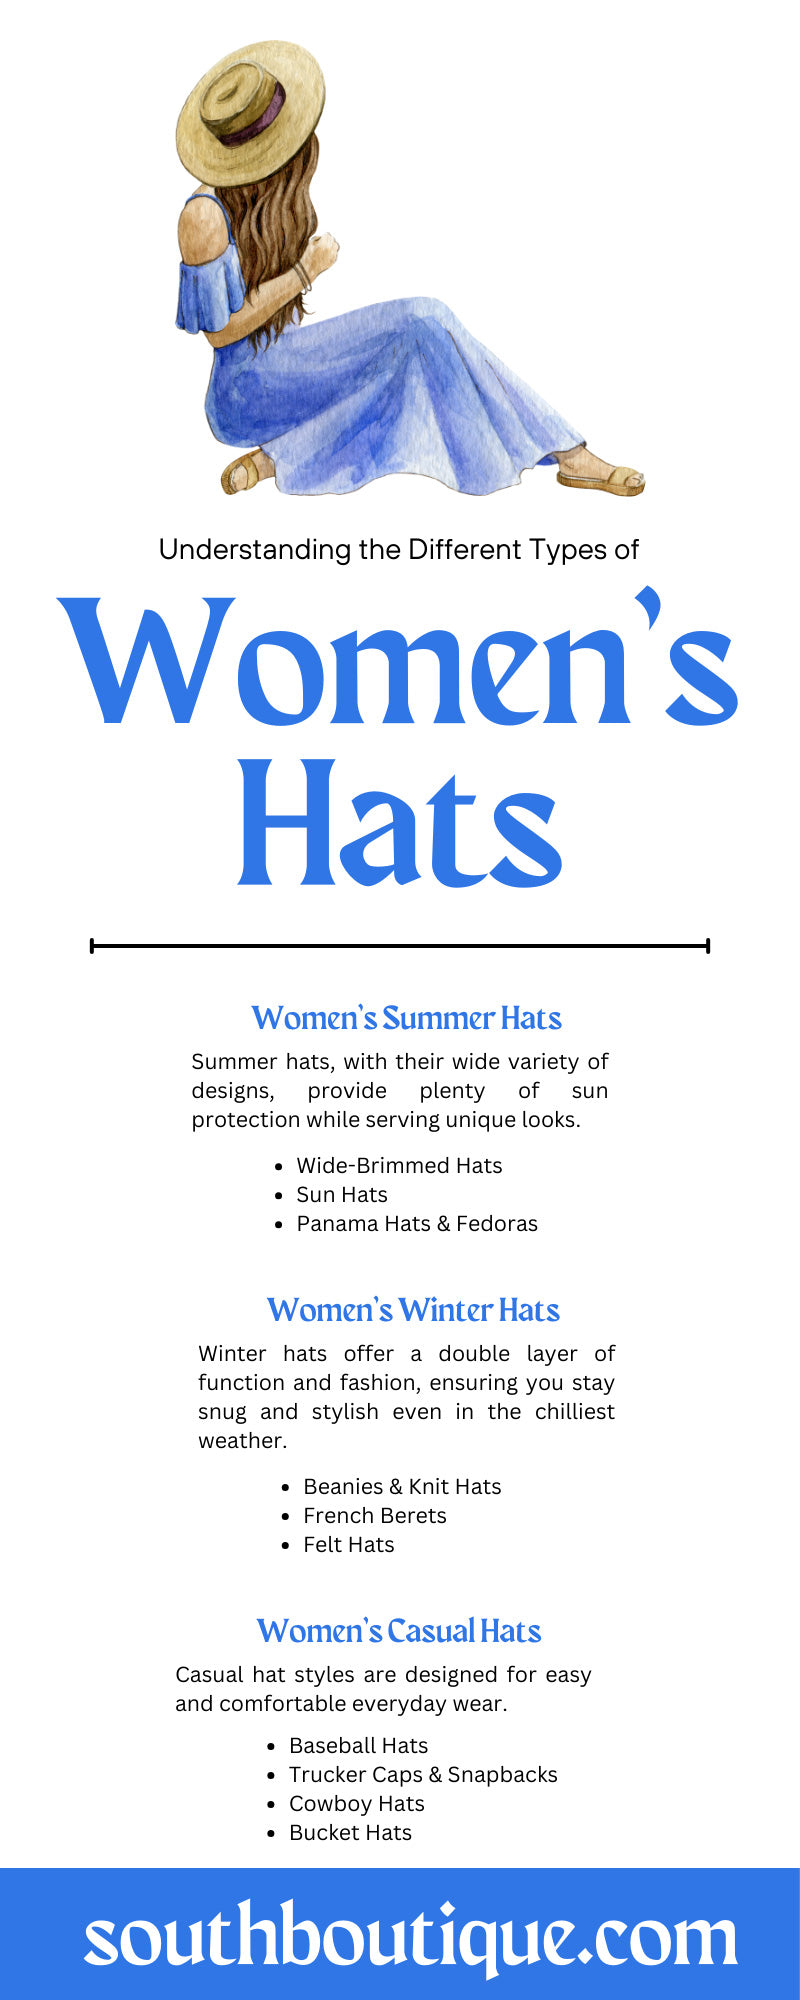 Understanding the Different Types of Women’s Hats